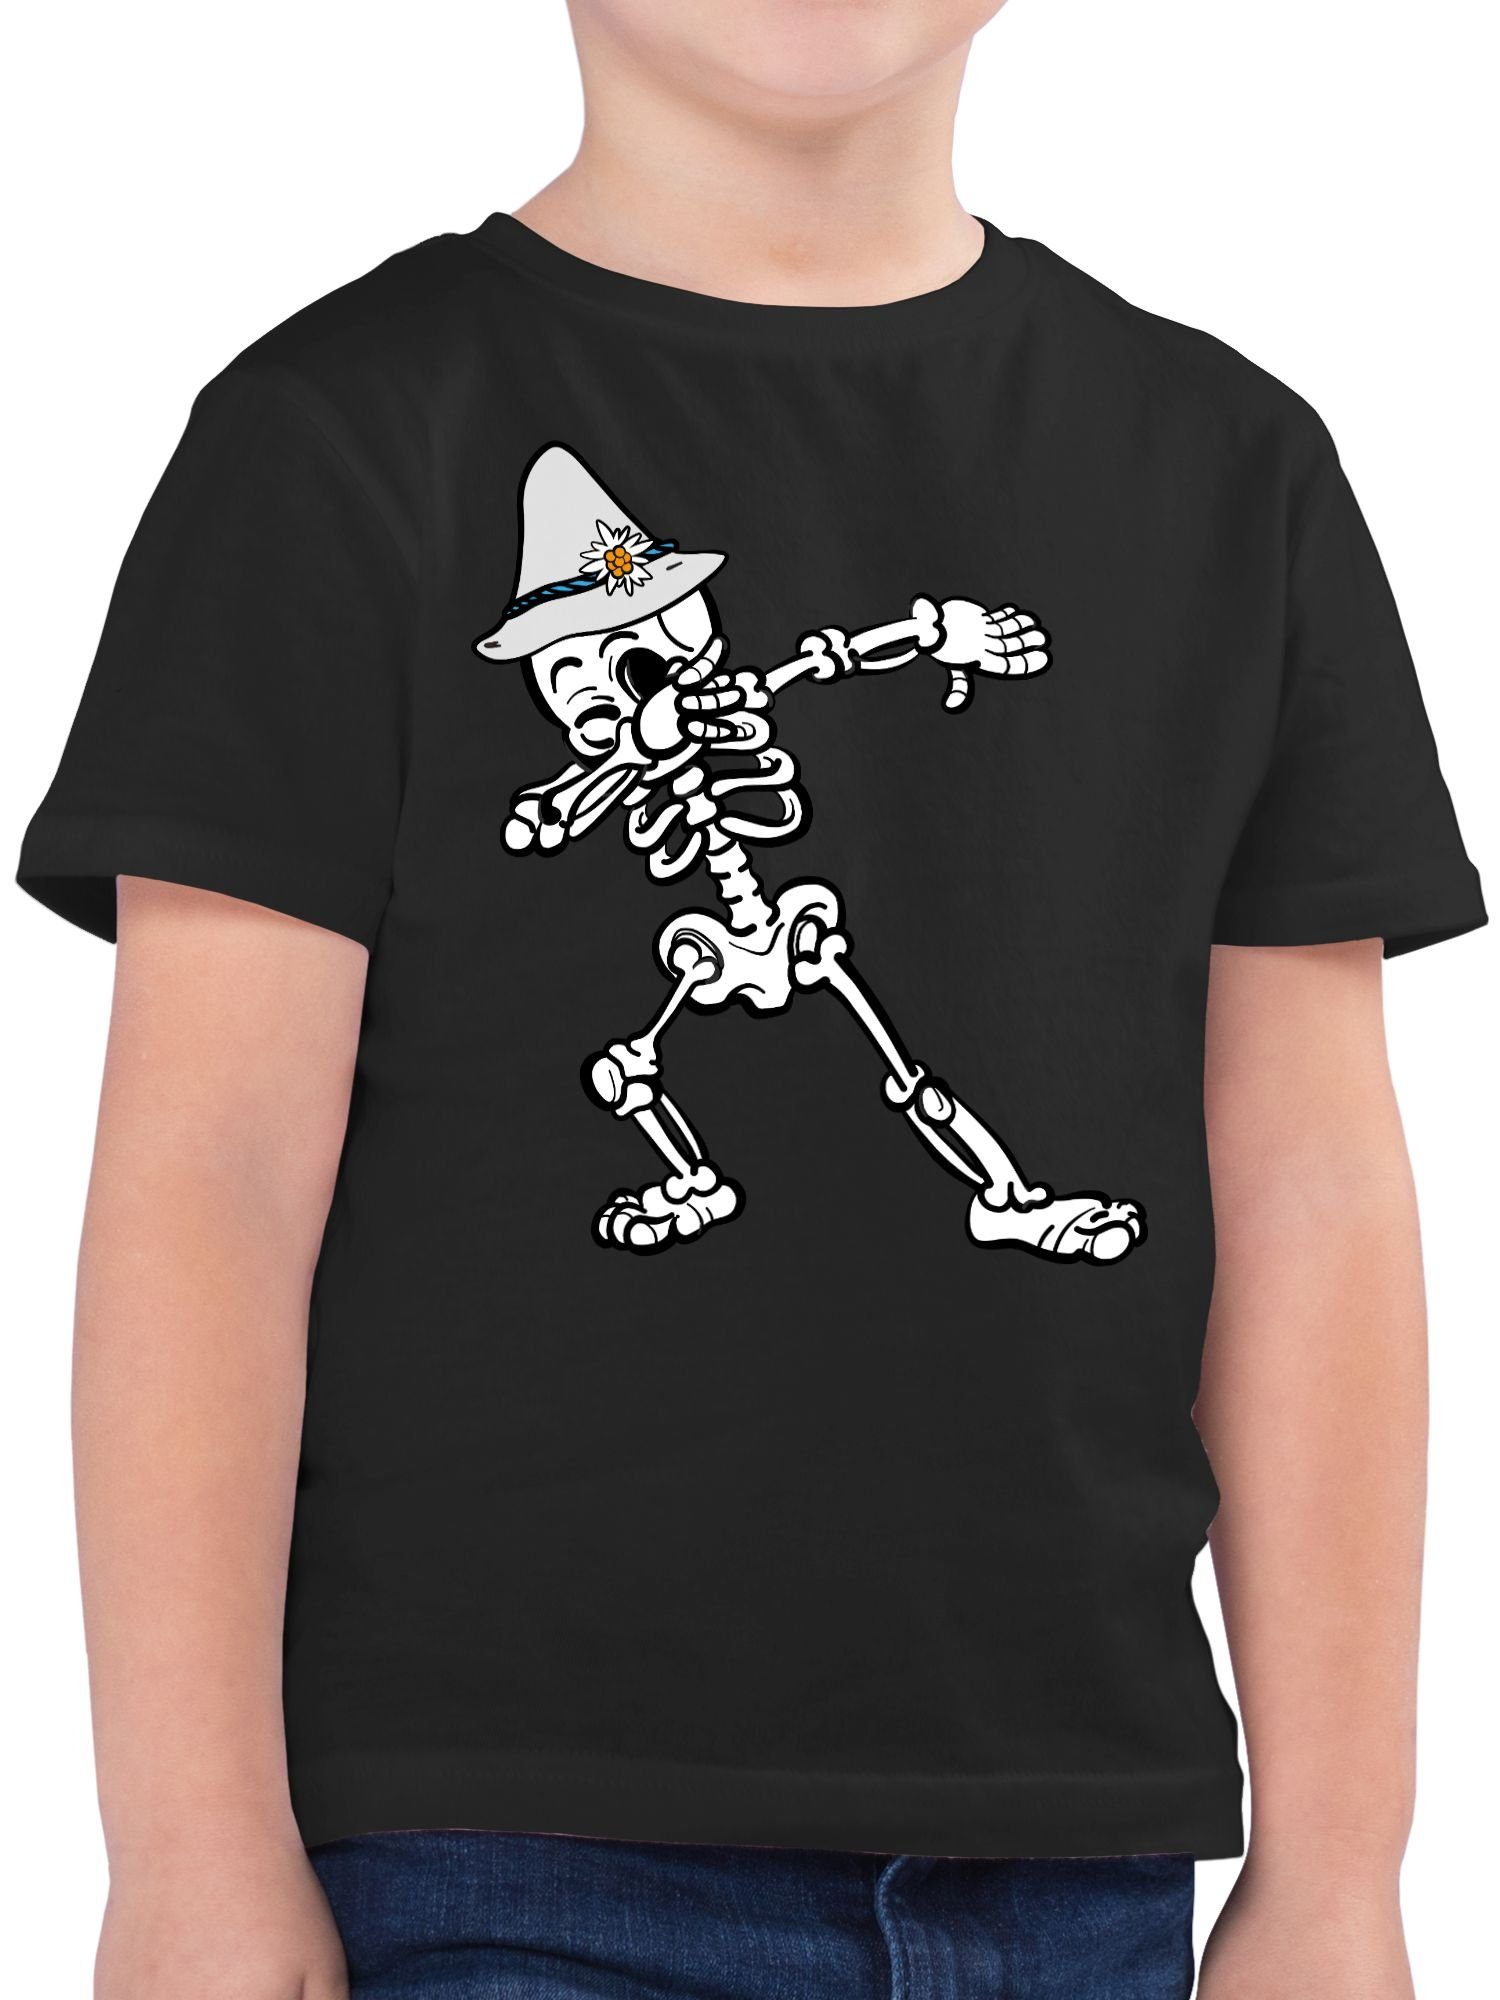 Shirtracer T-Shirt Skelett Dab Wiesn Junge Mode für Oktoberfest Kinder Outfit 1 Schwarz